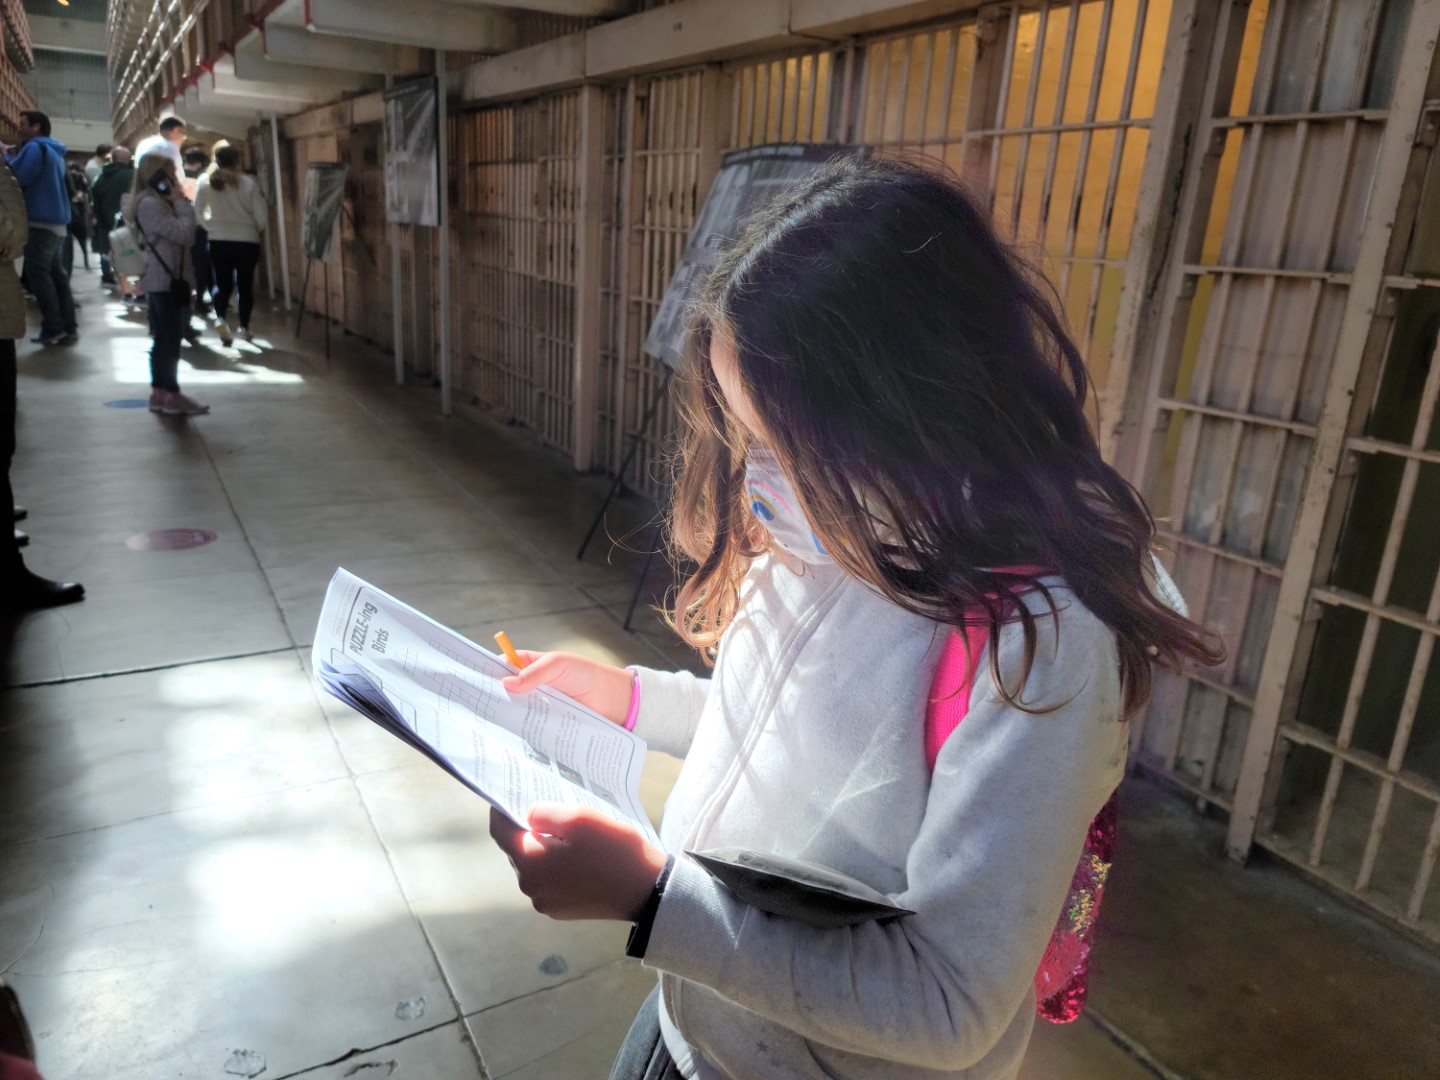 kid looking at activity book inside Alcatraz